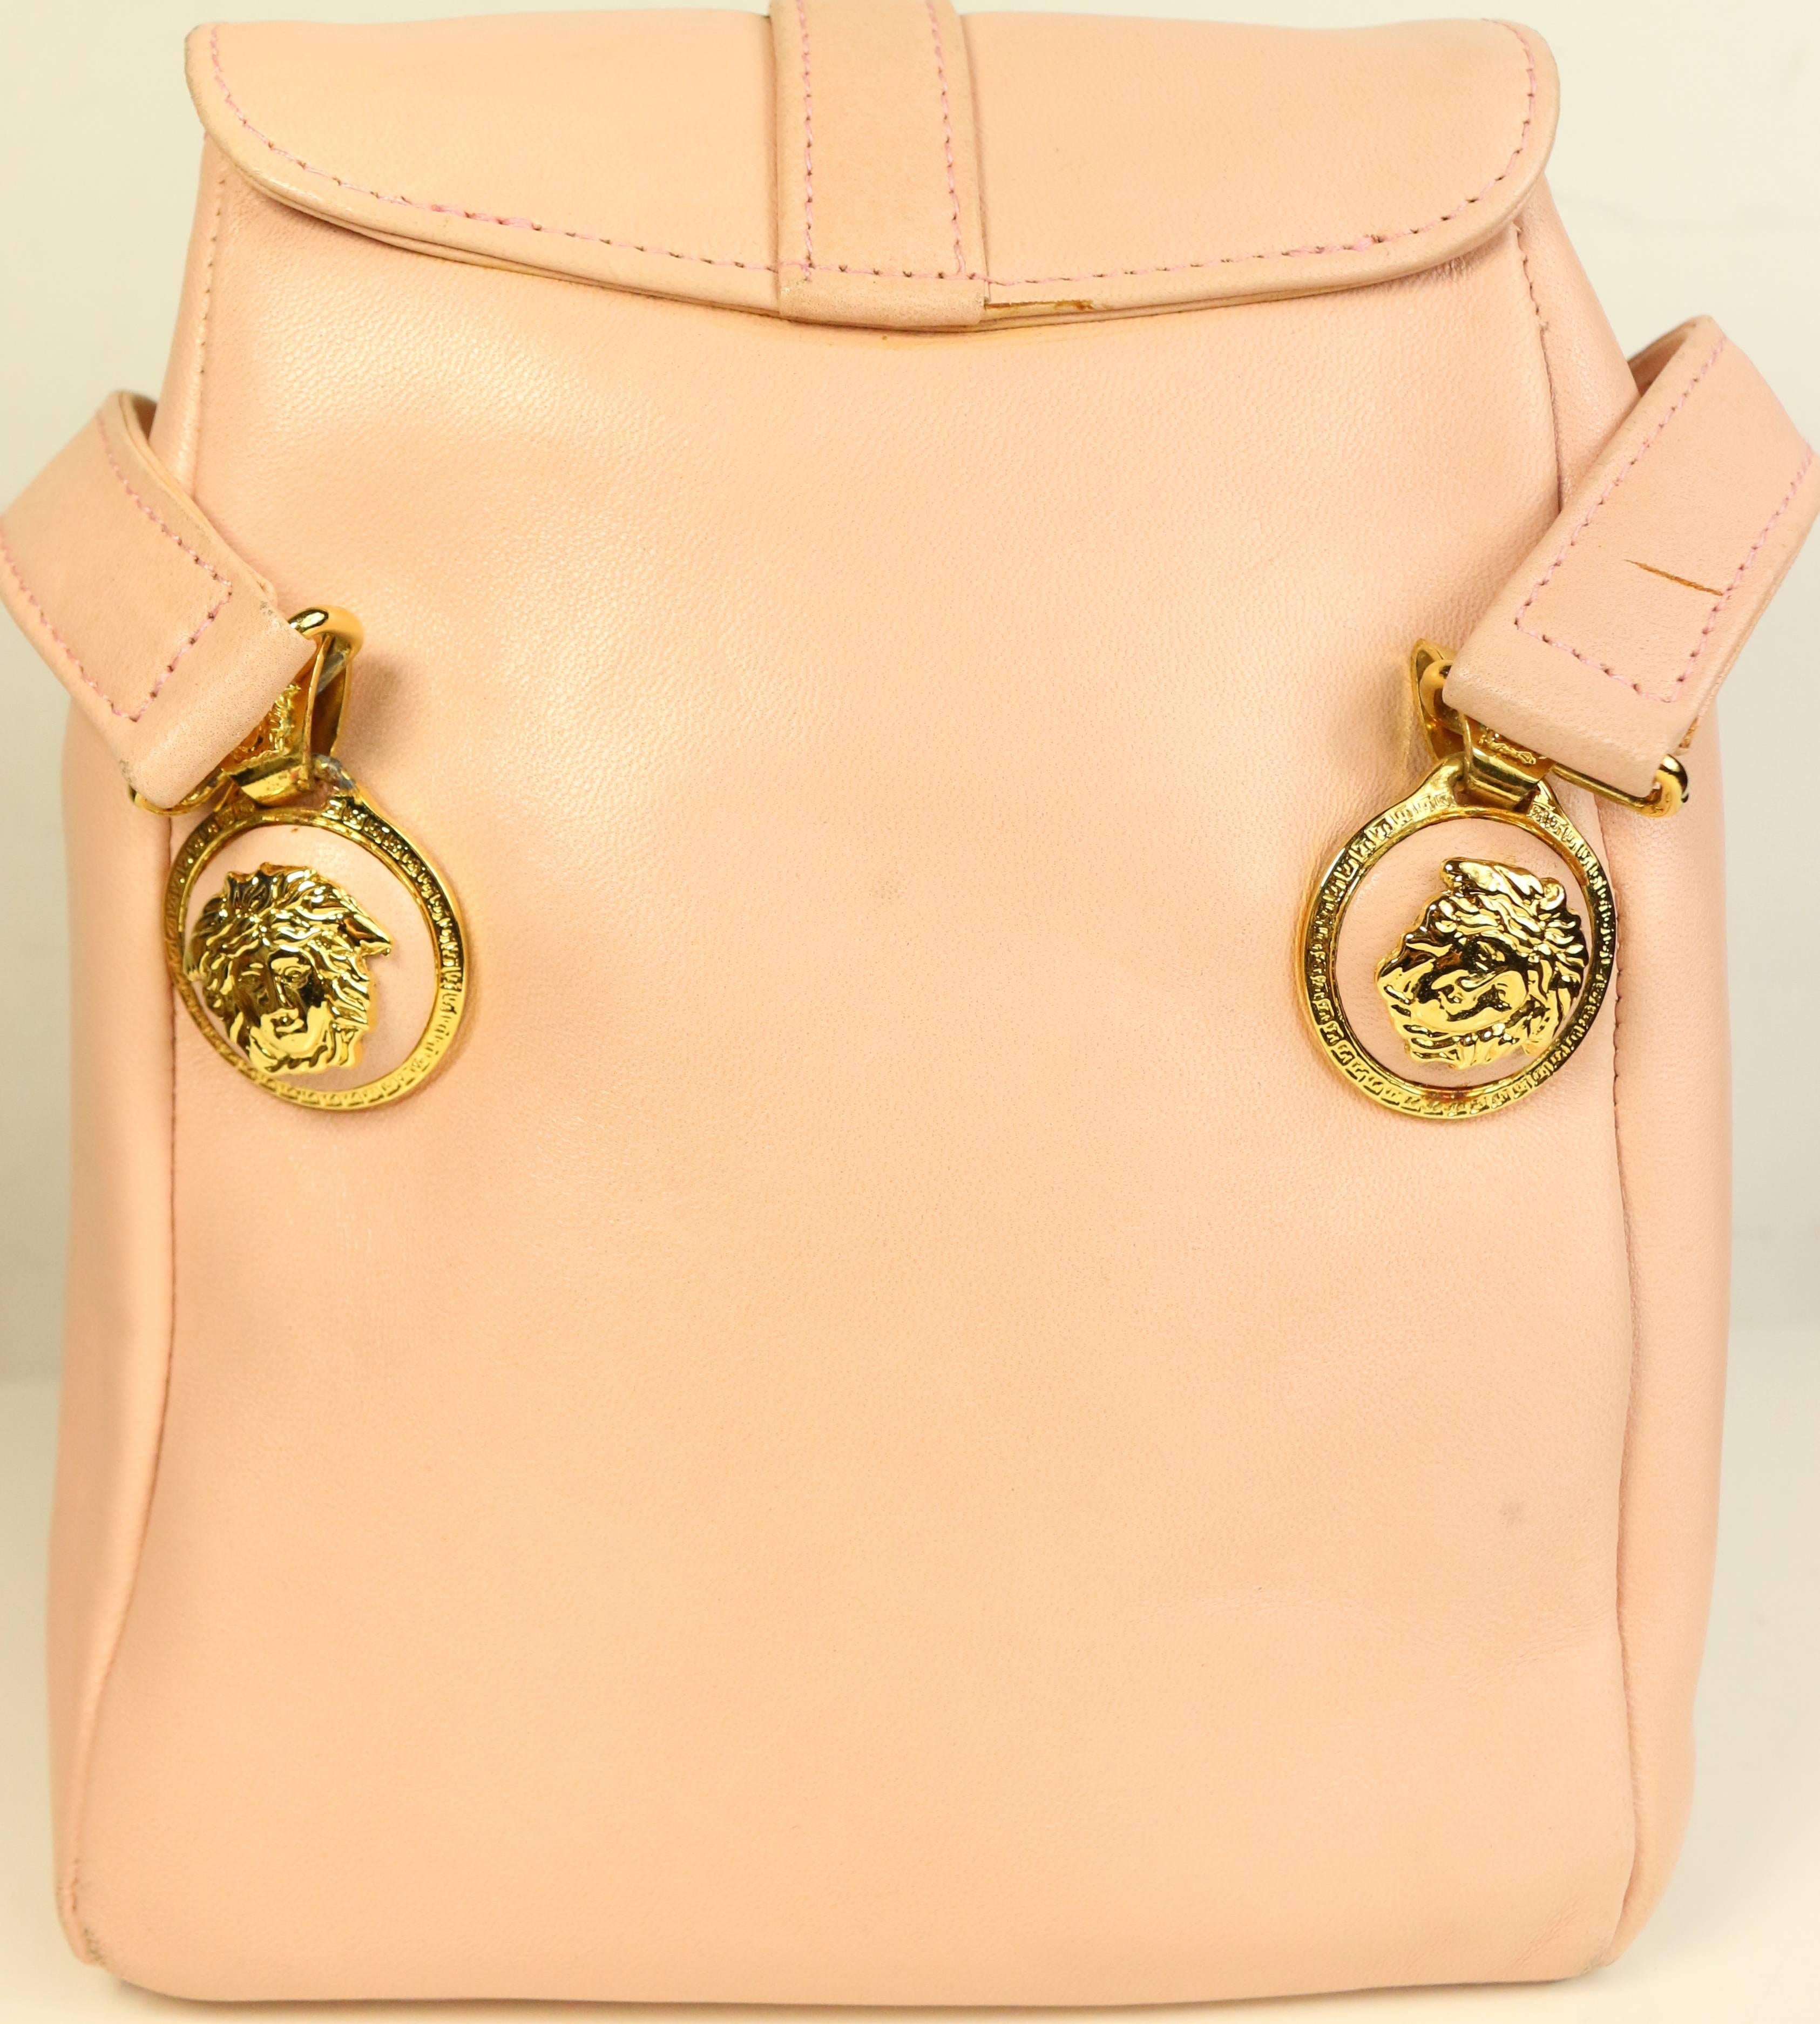 rustic couture handbags